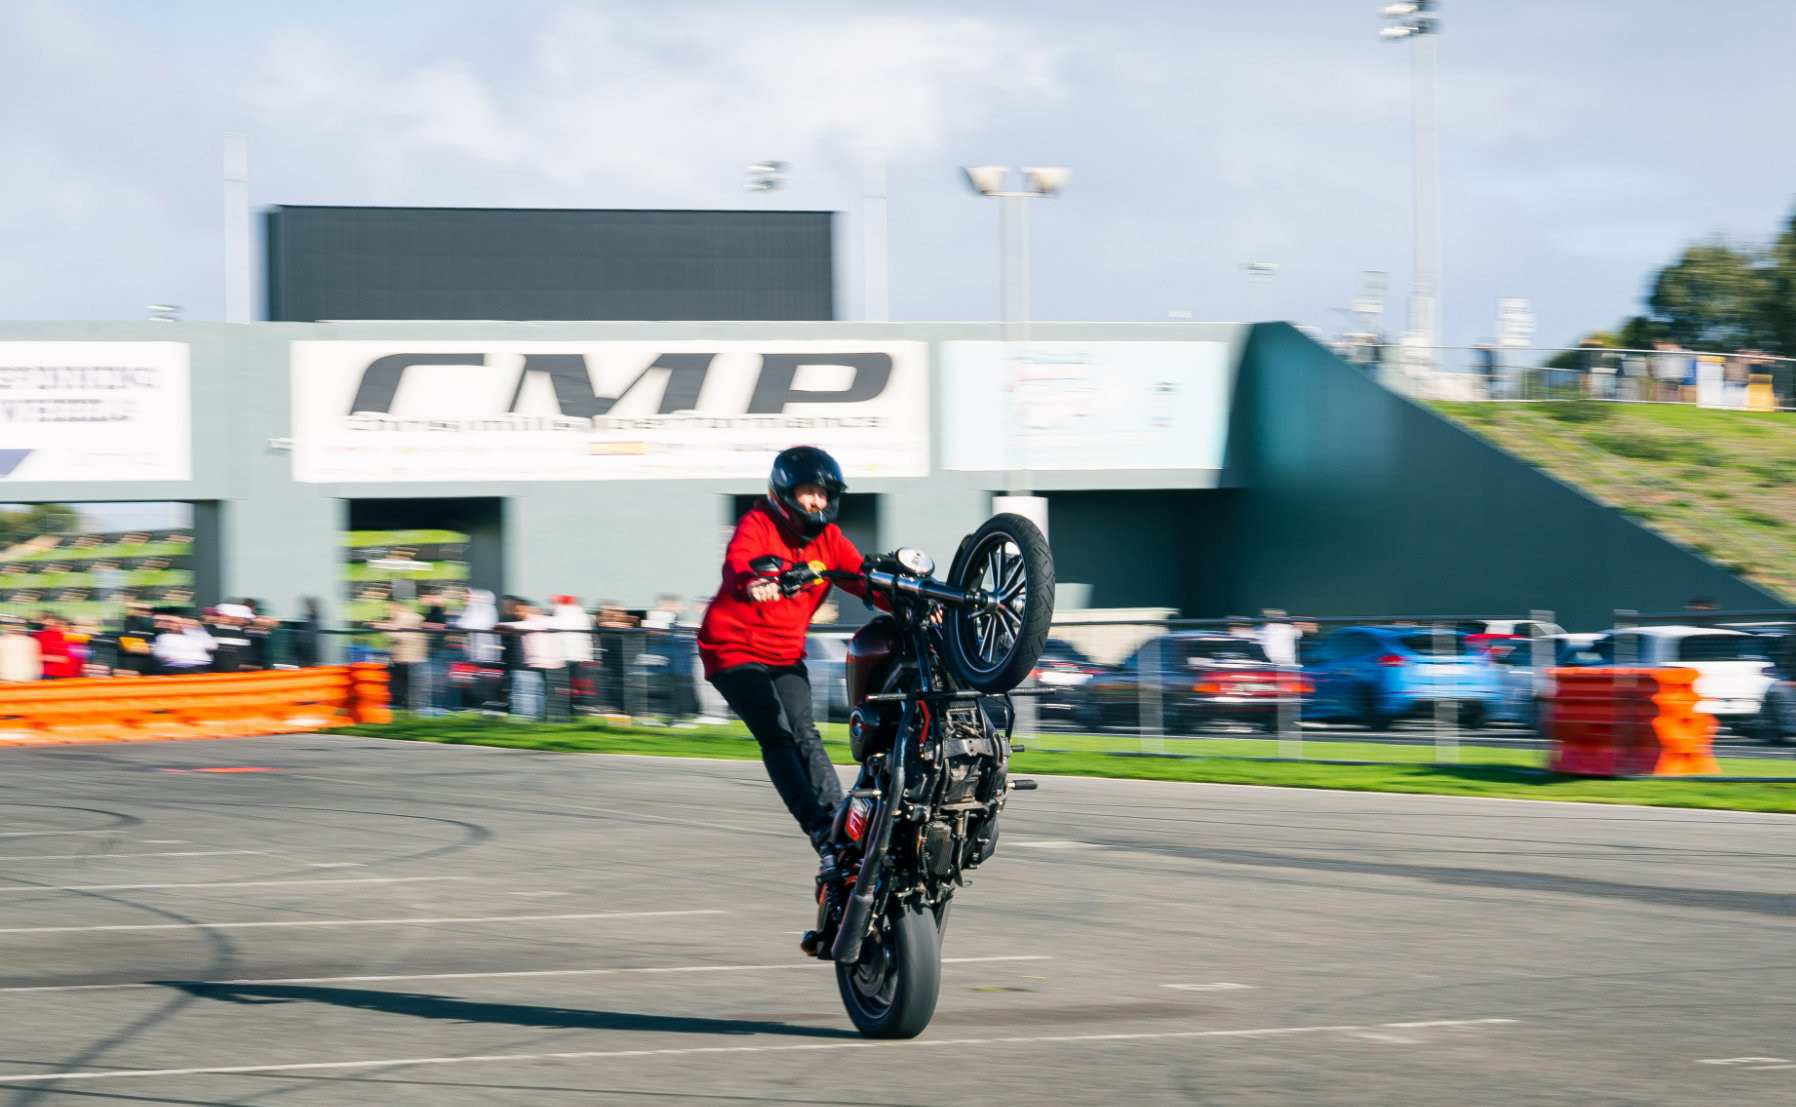 Man doing a stunt on a motorbike